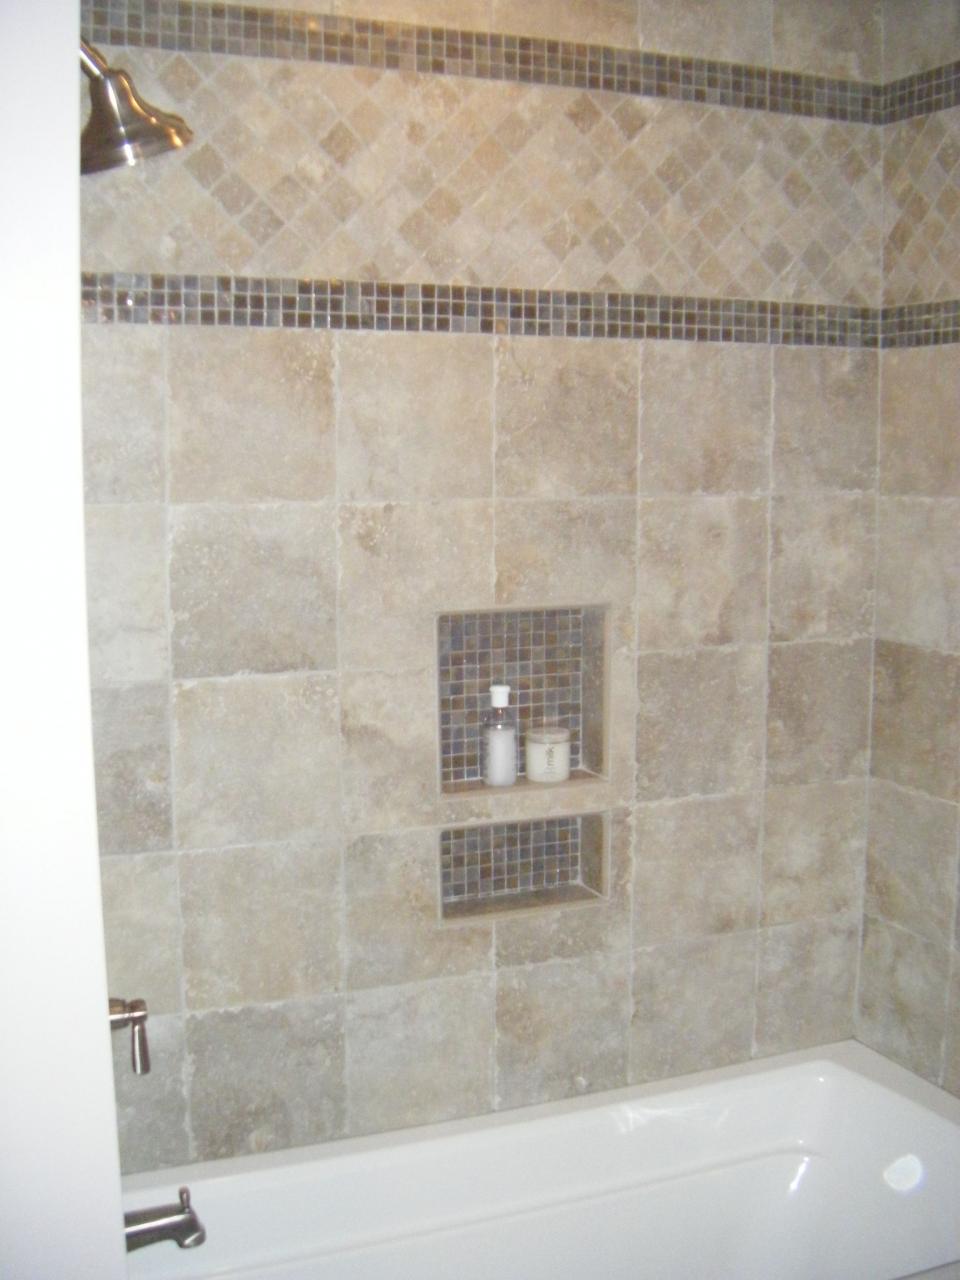 Bathroom Border Tile 37 Ideas To Use All 4 Bahtroom Border Tile Types